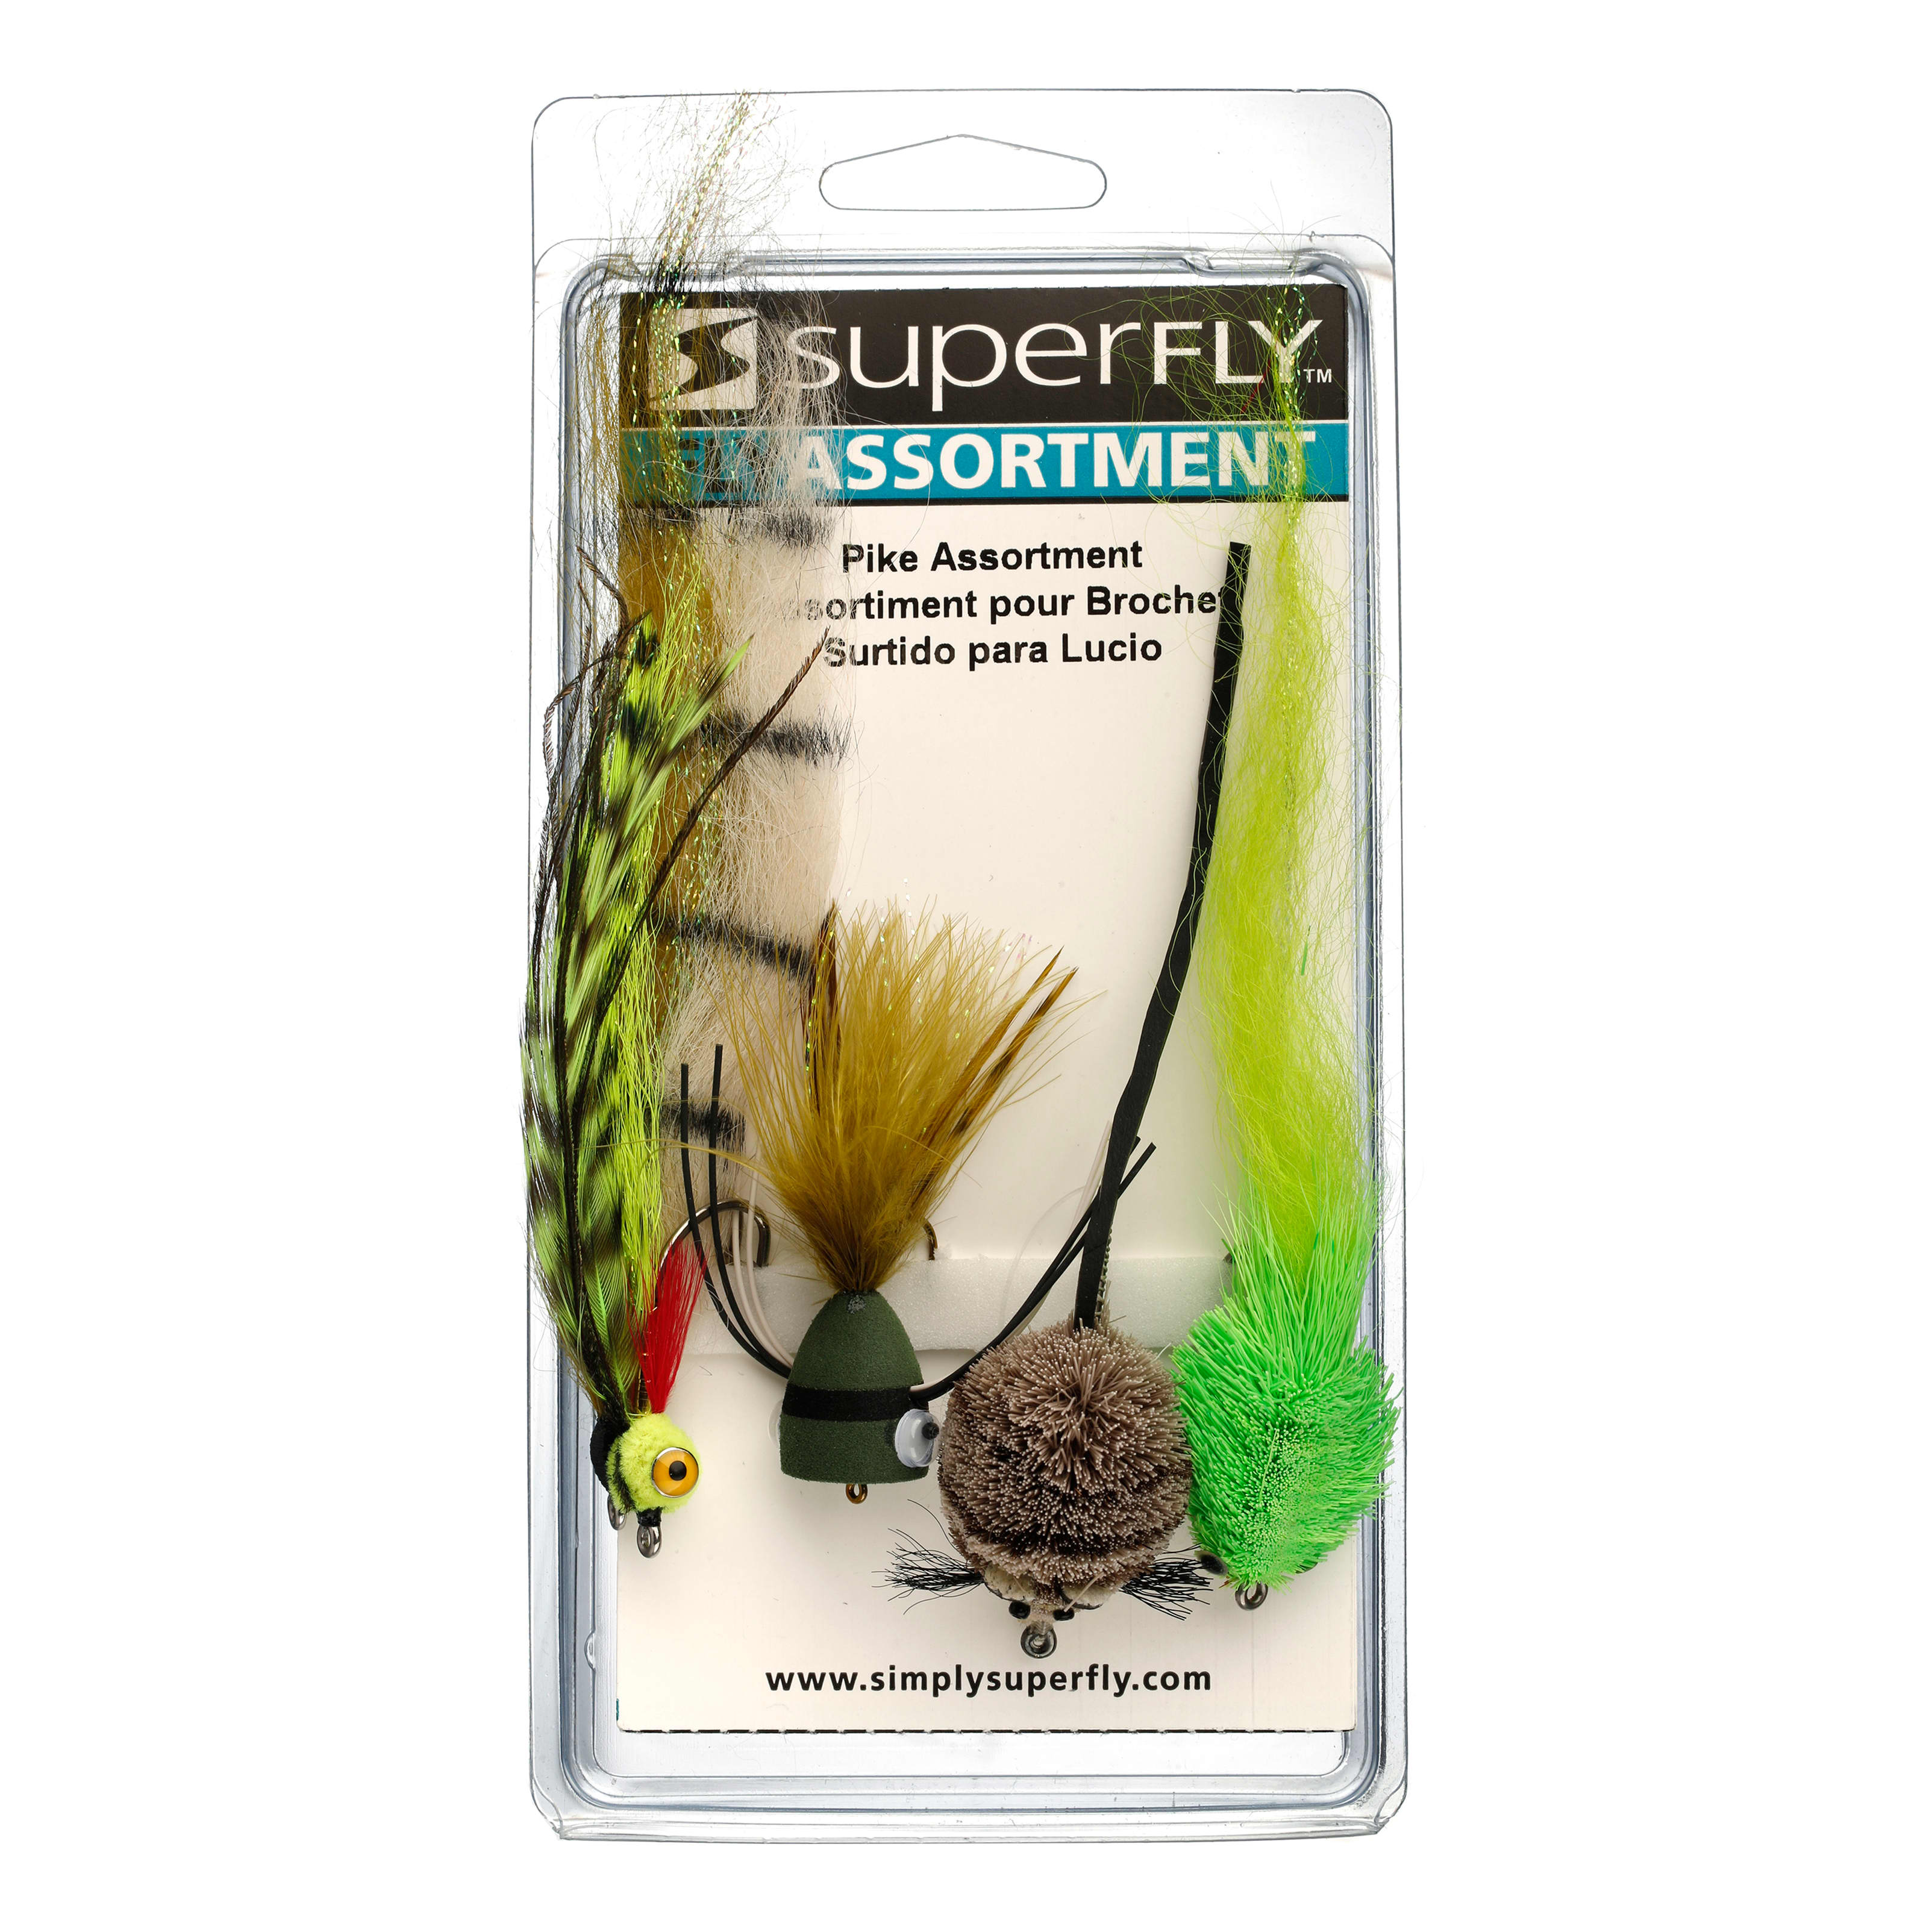 Superfly Premium Pike Assortment